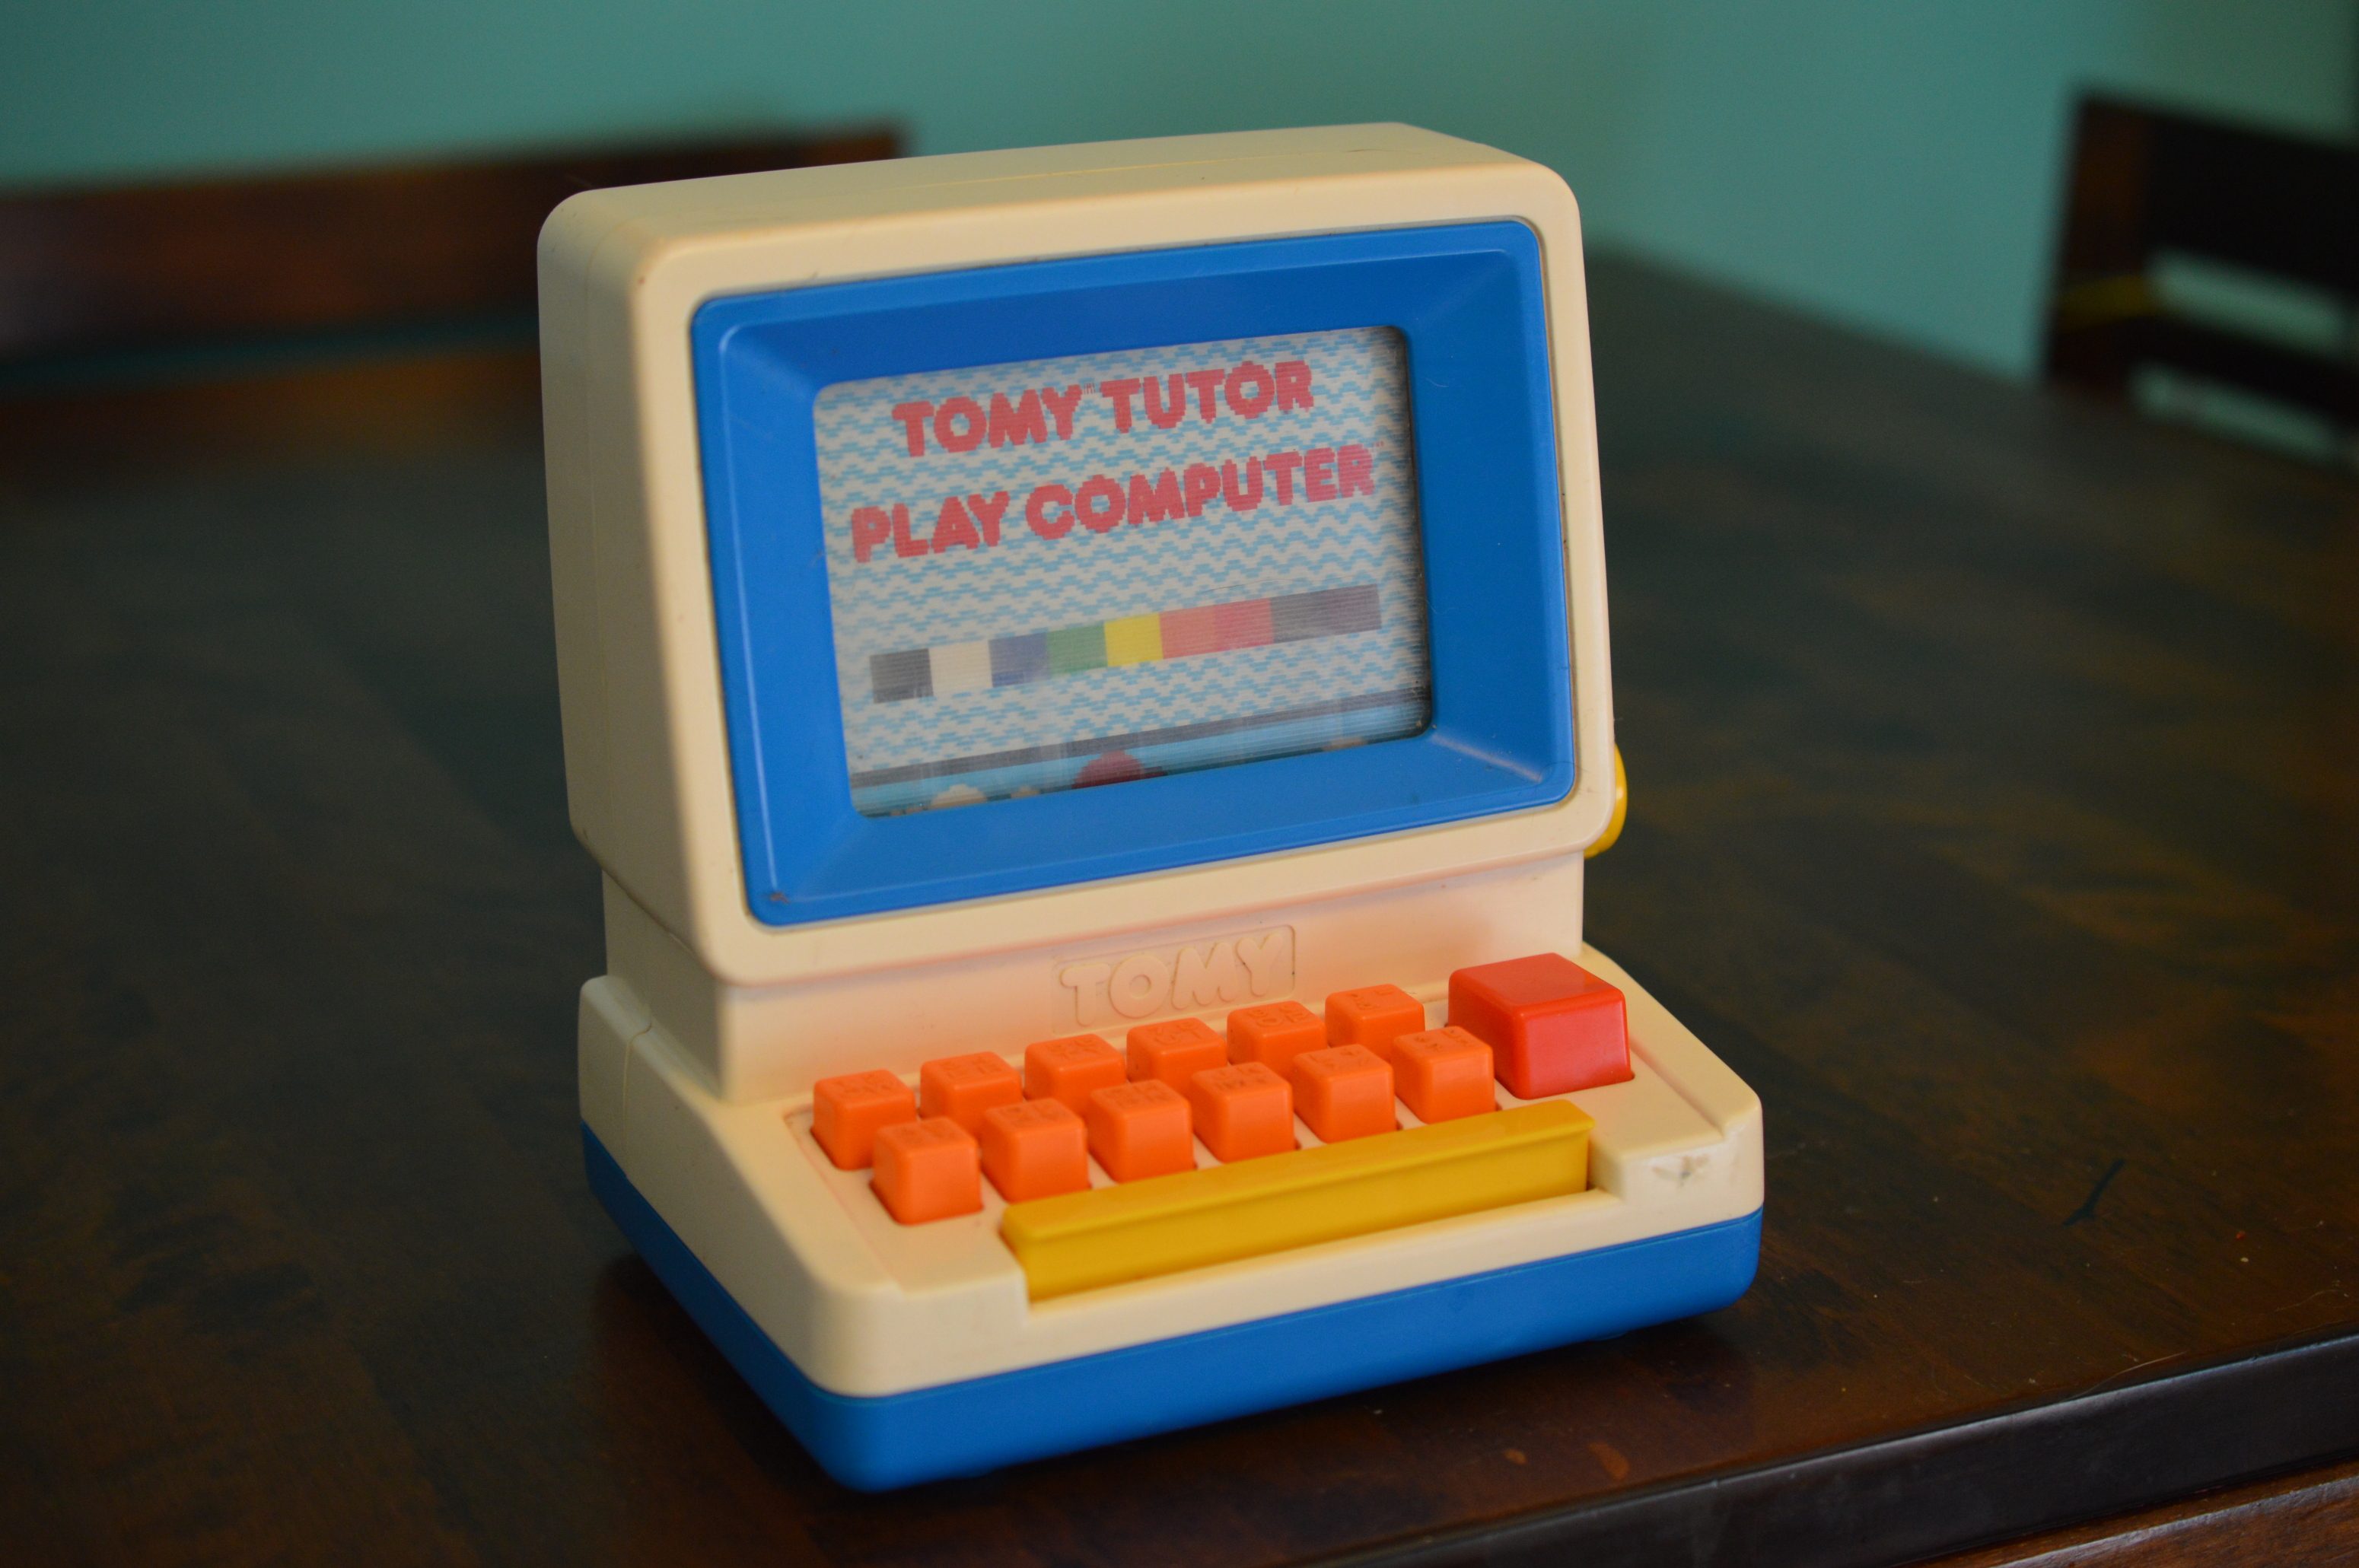 tomy tutor play computer